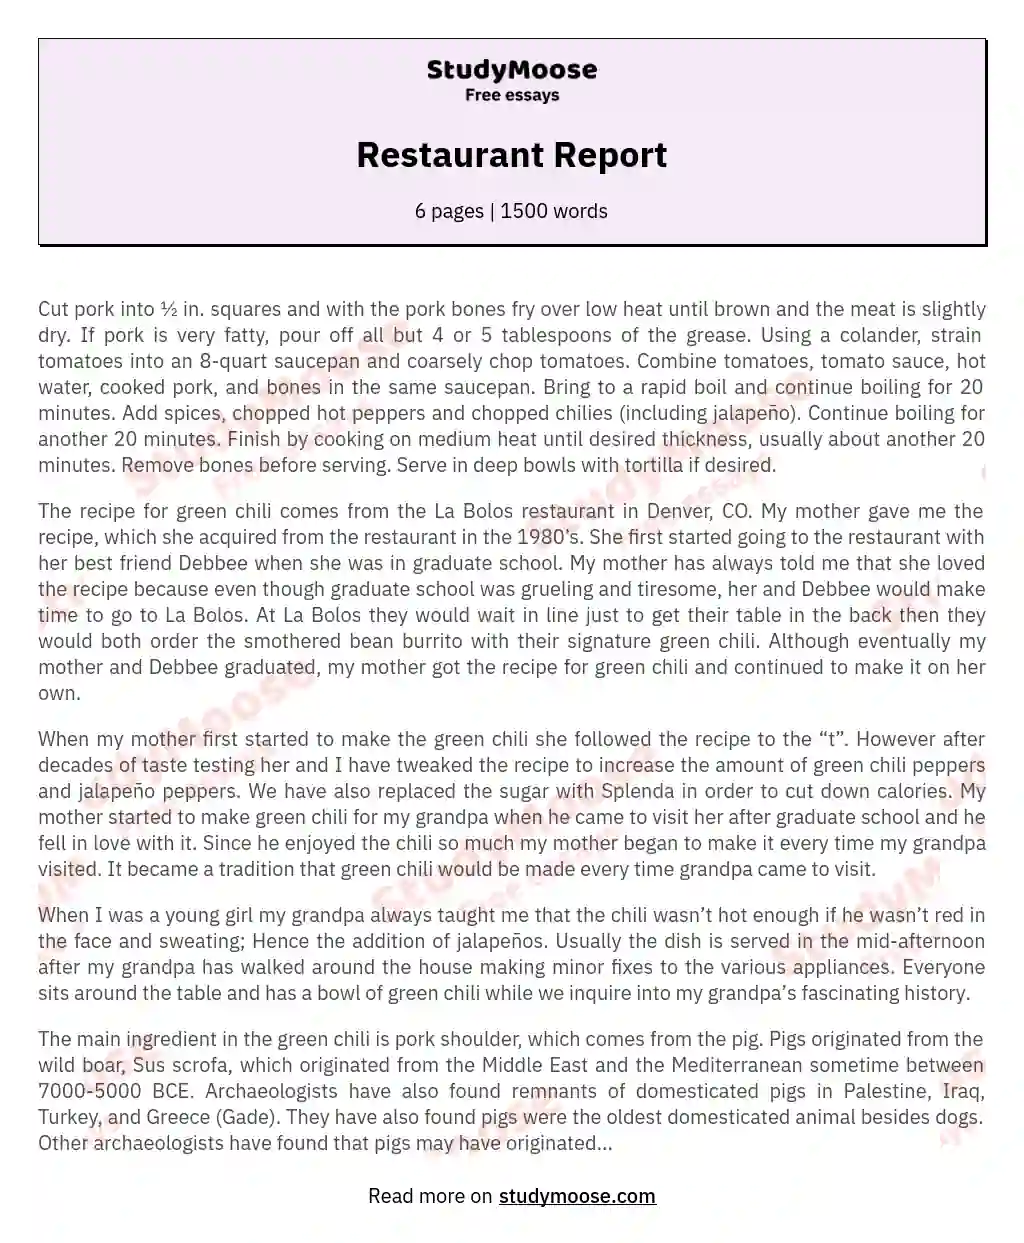 Restaurant Report essay